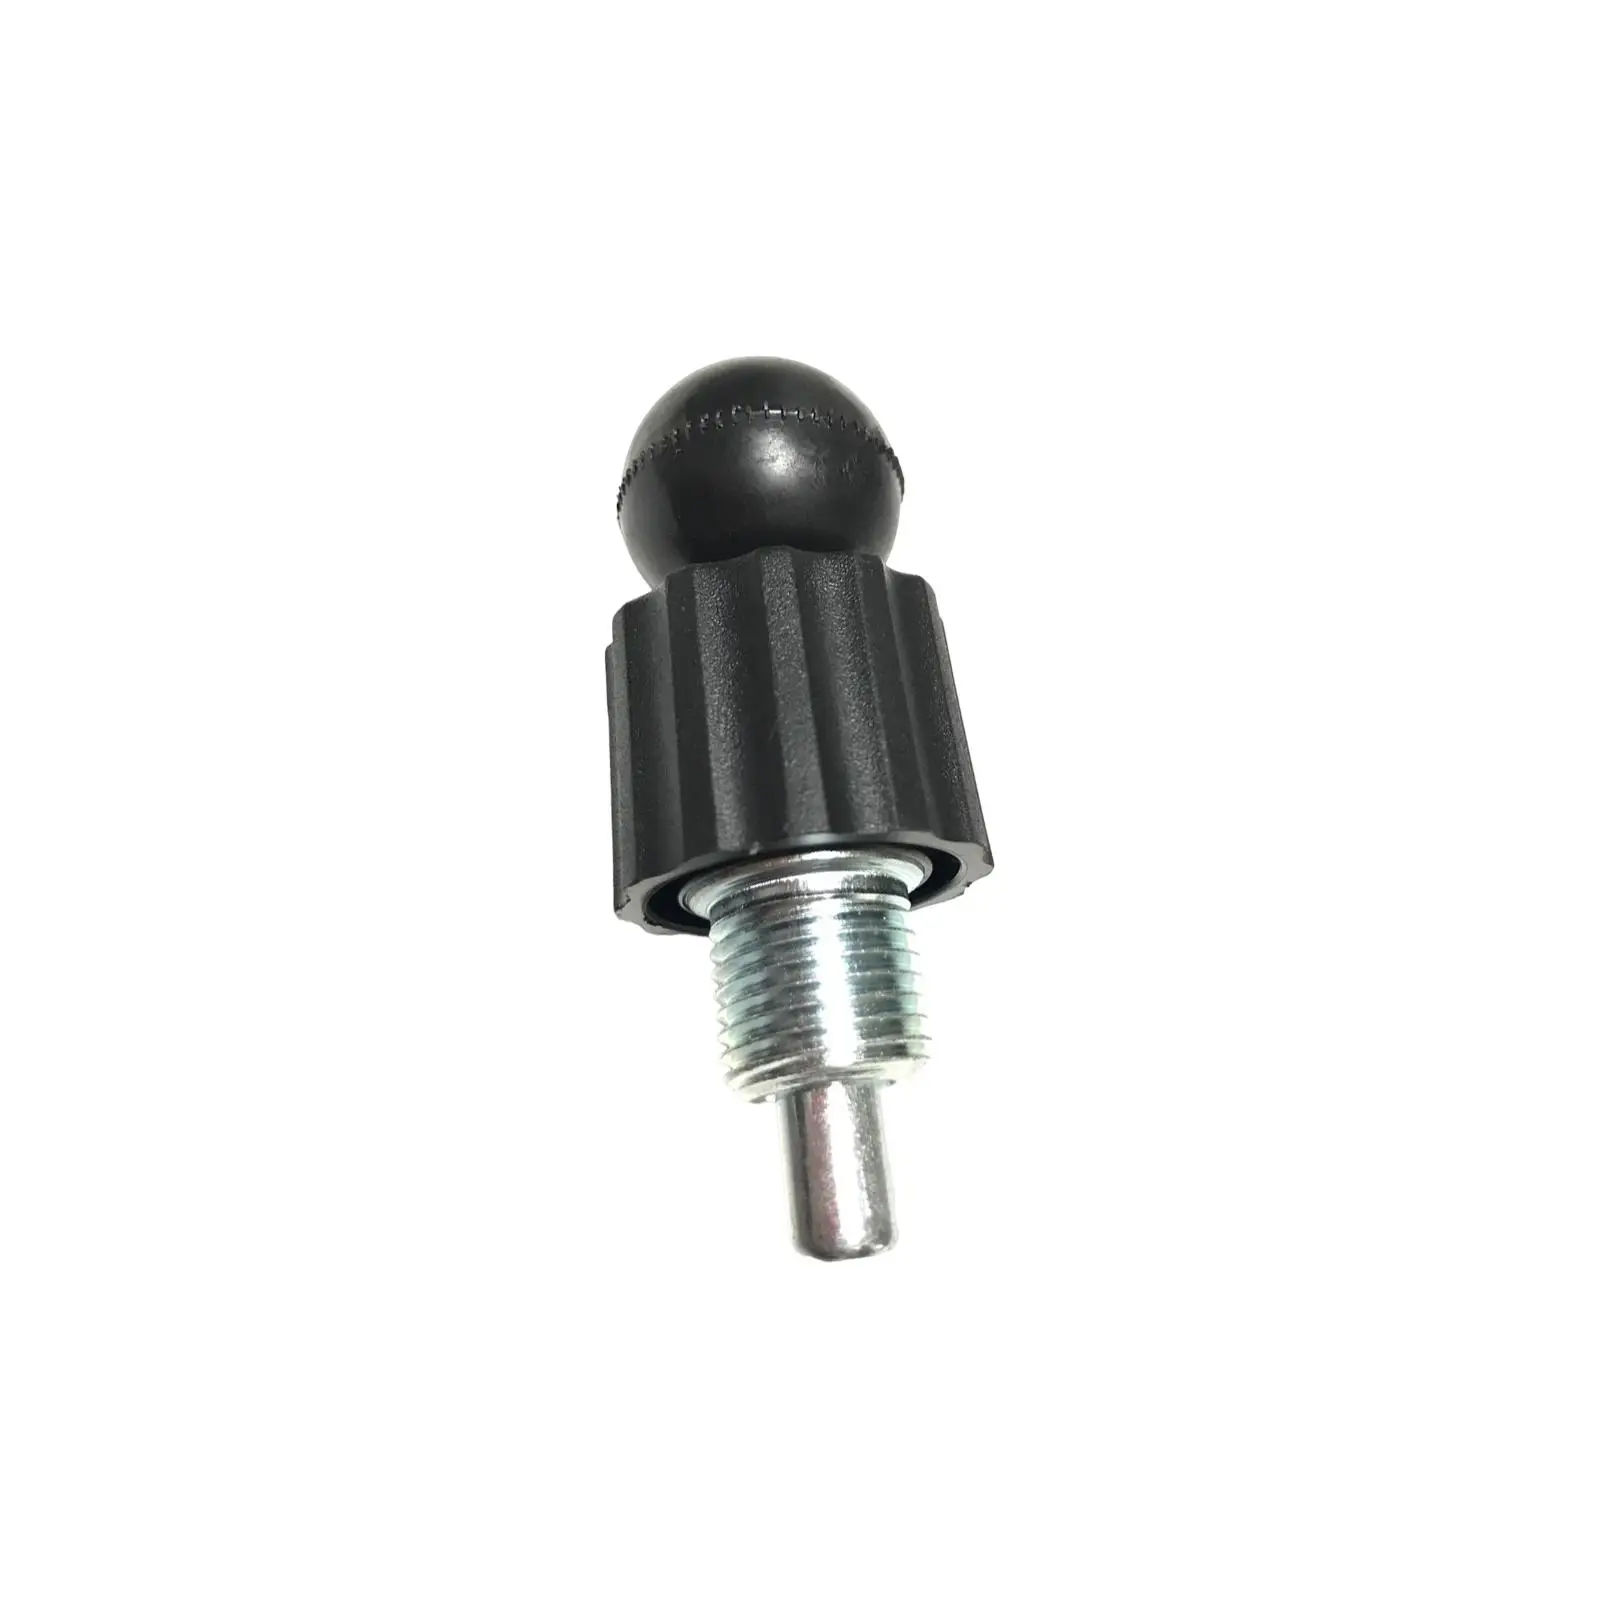 Pull Pin Spring Knob, Lightweight Durable Iron Universal Mini Elastic Latch for